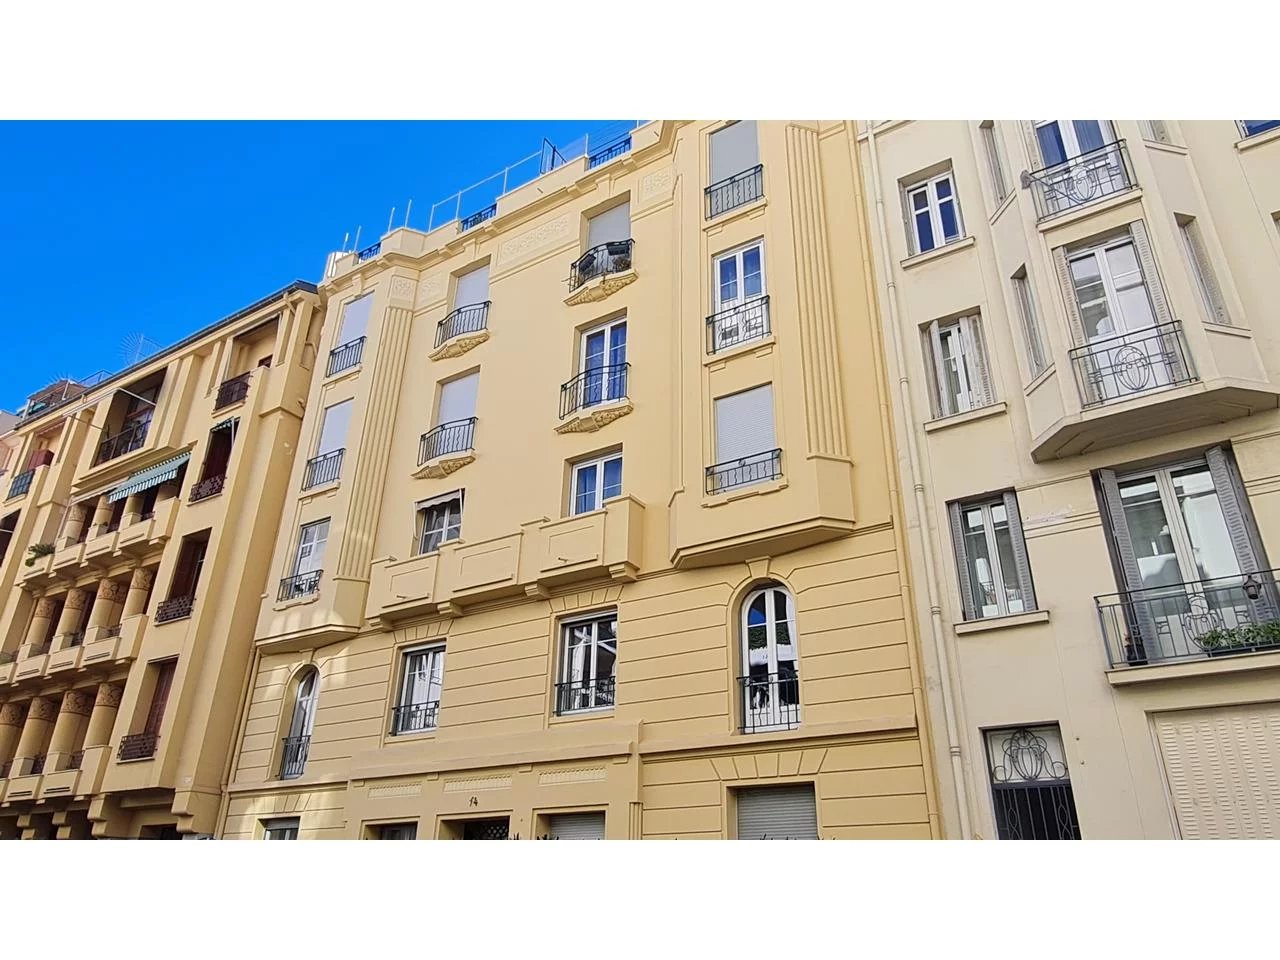 Appartement  3 Locali 67m2  In vendita   665 000 €